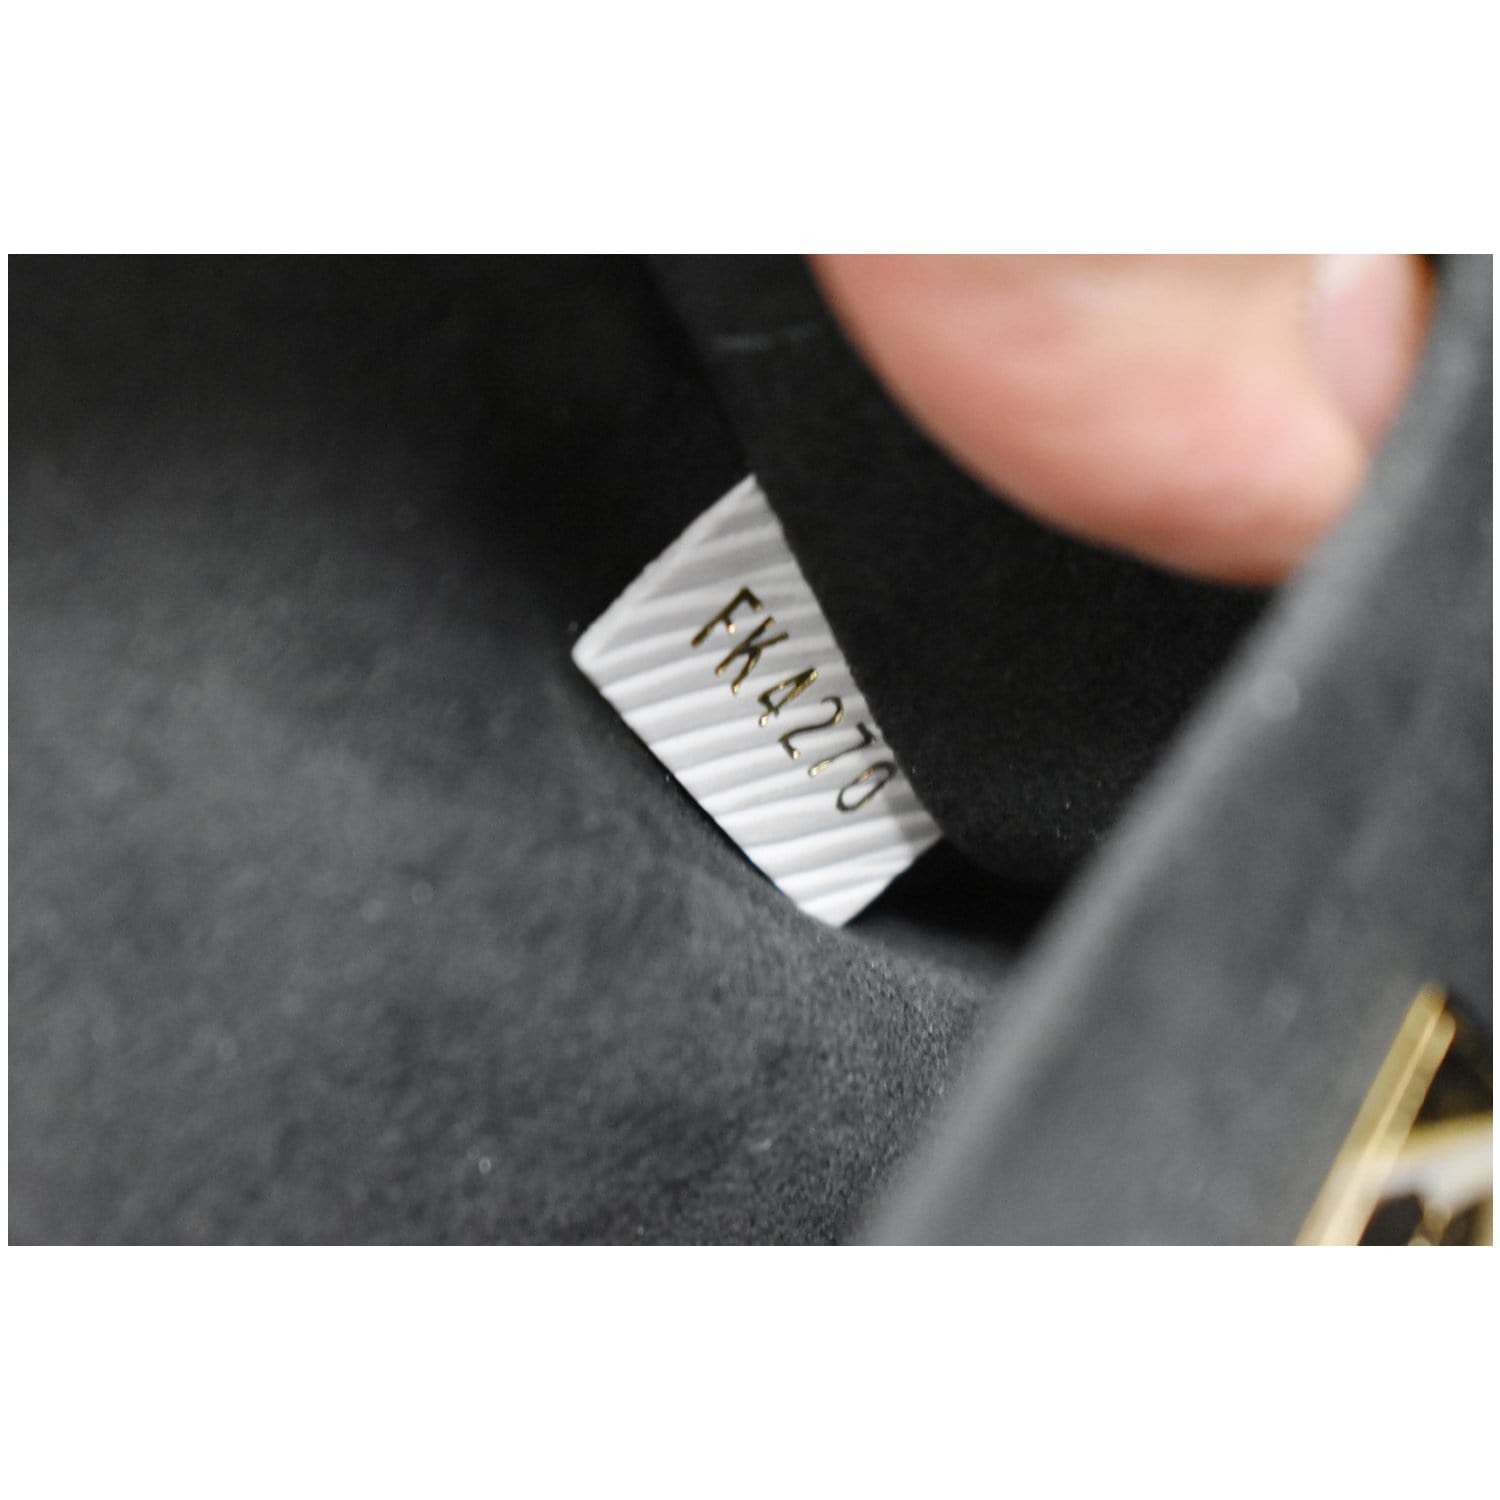 Louis Vuitton Beige/Black Grained Calfskin Leather Arch Crossbody Bag